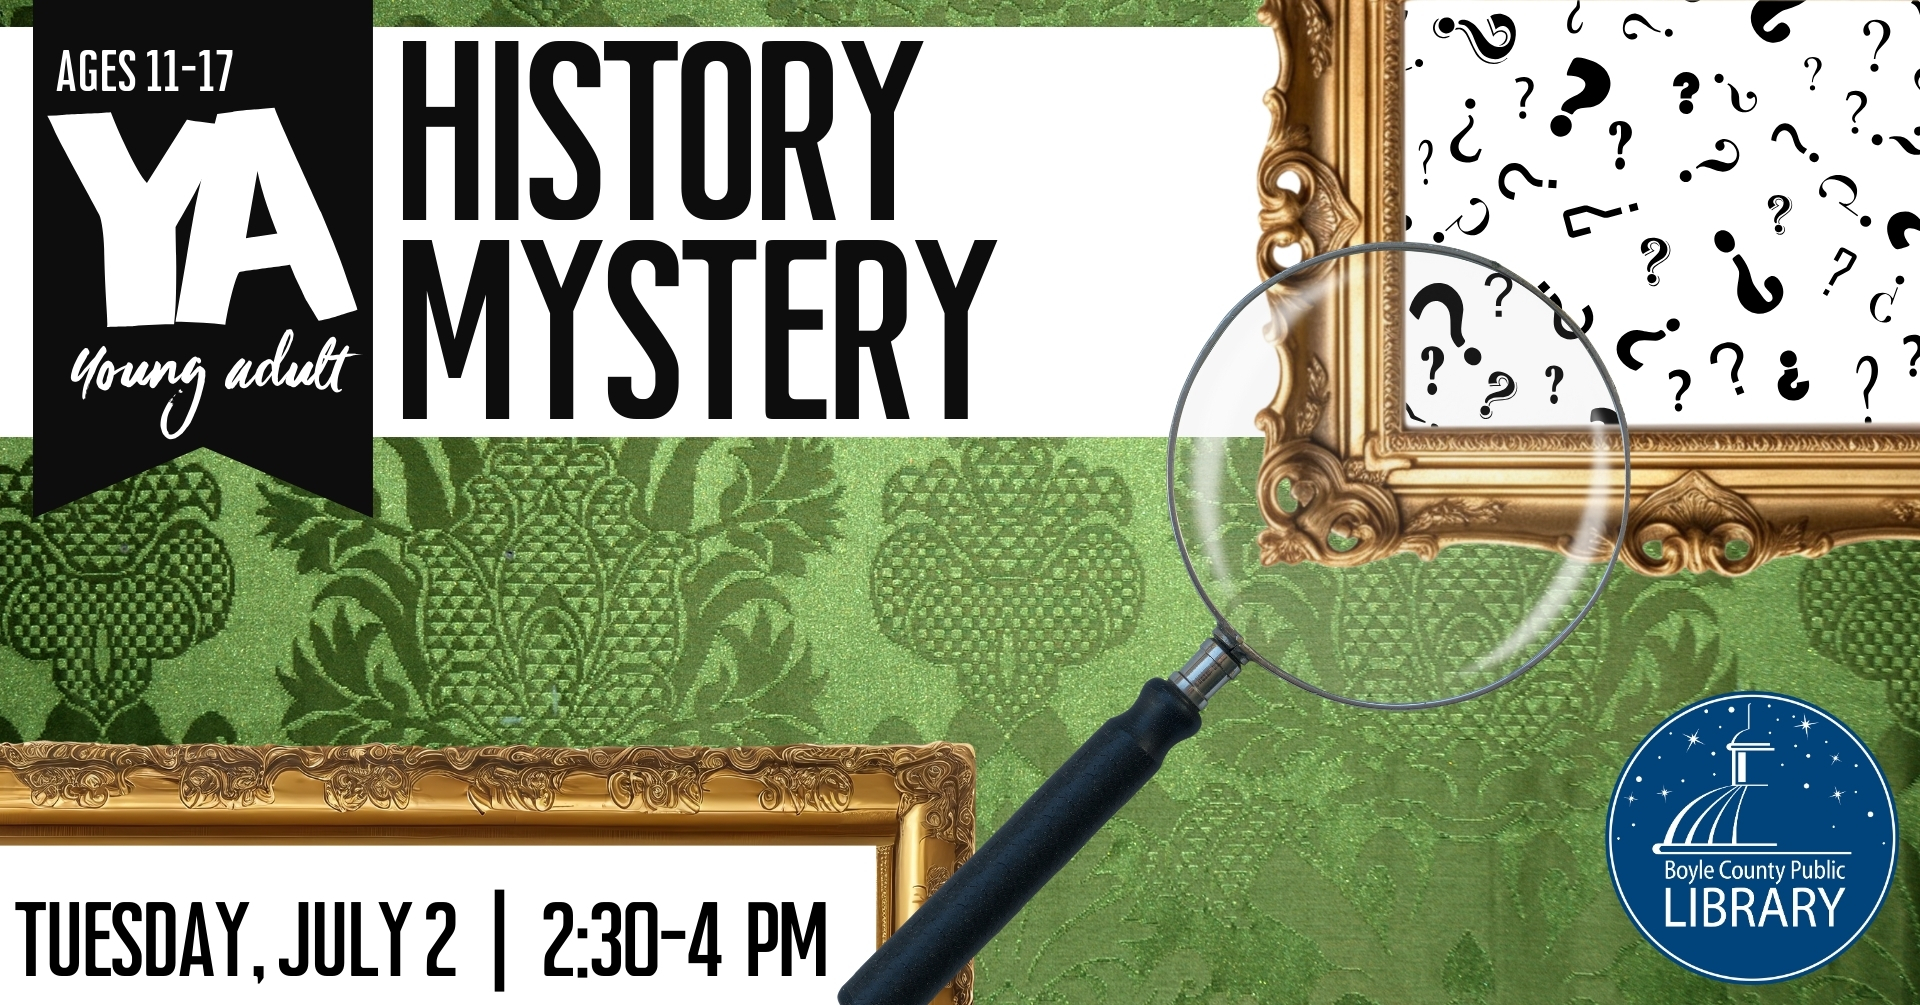 YA History Mystery Poster